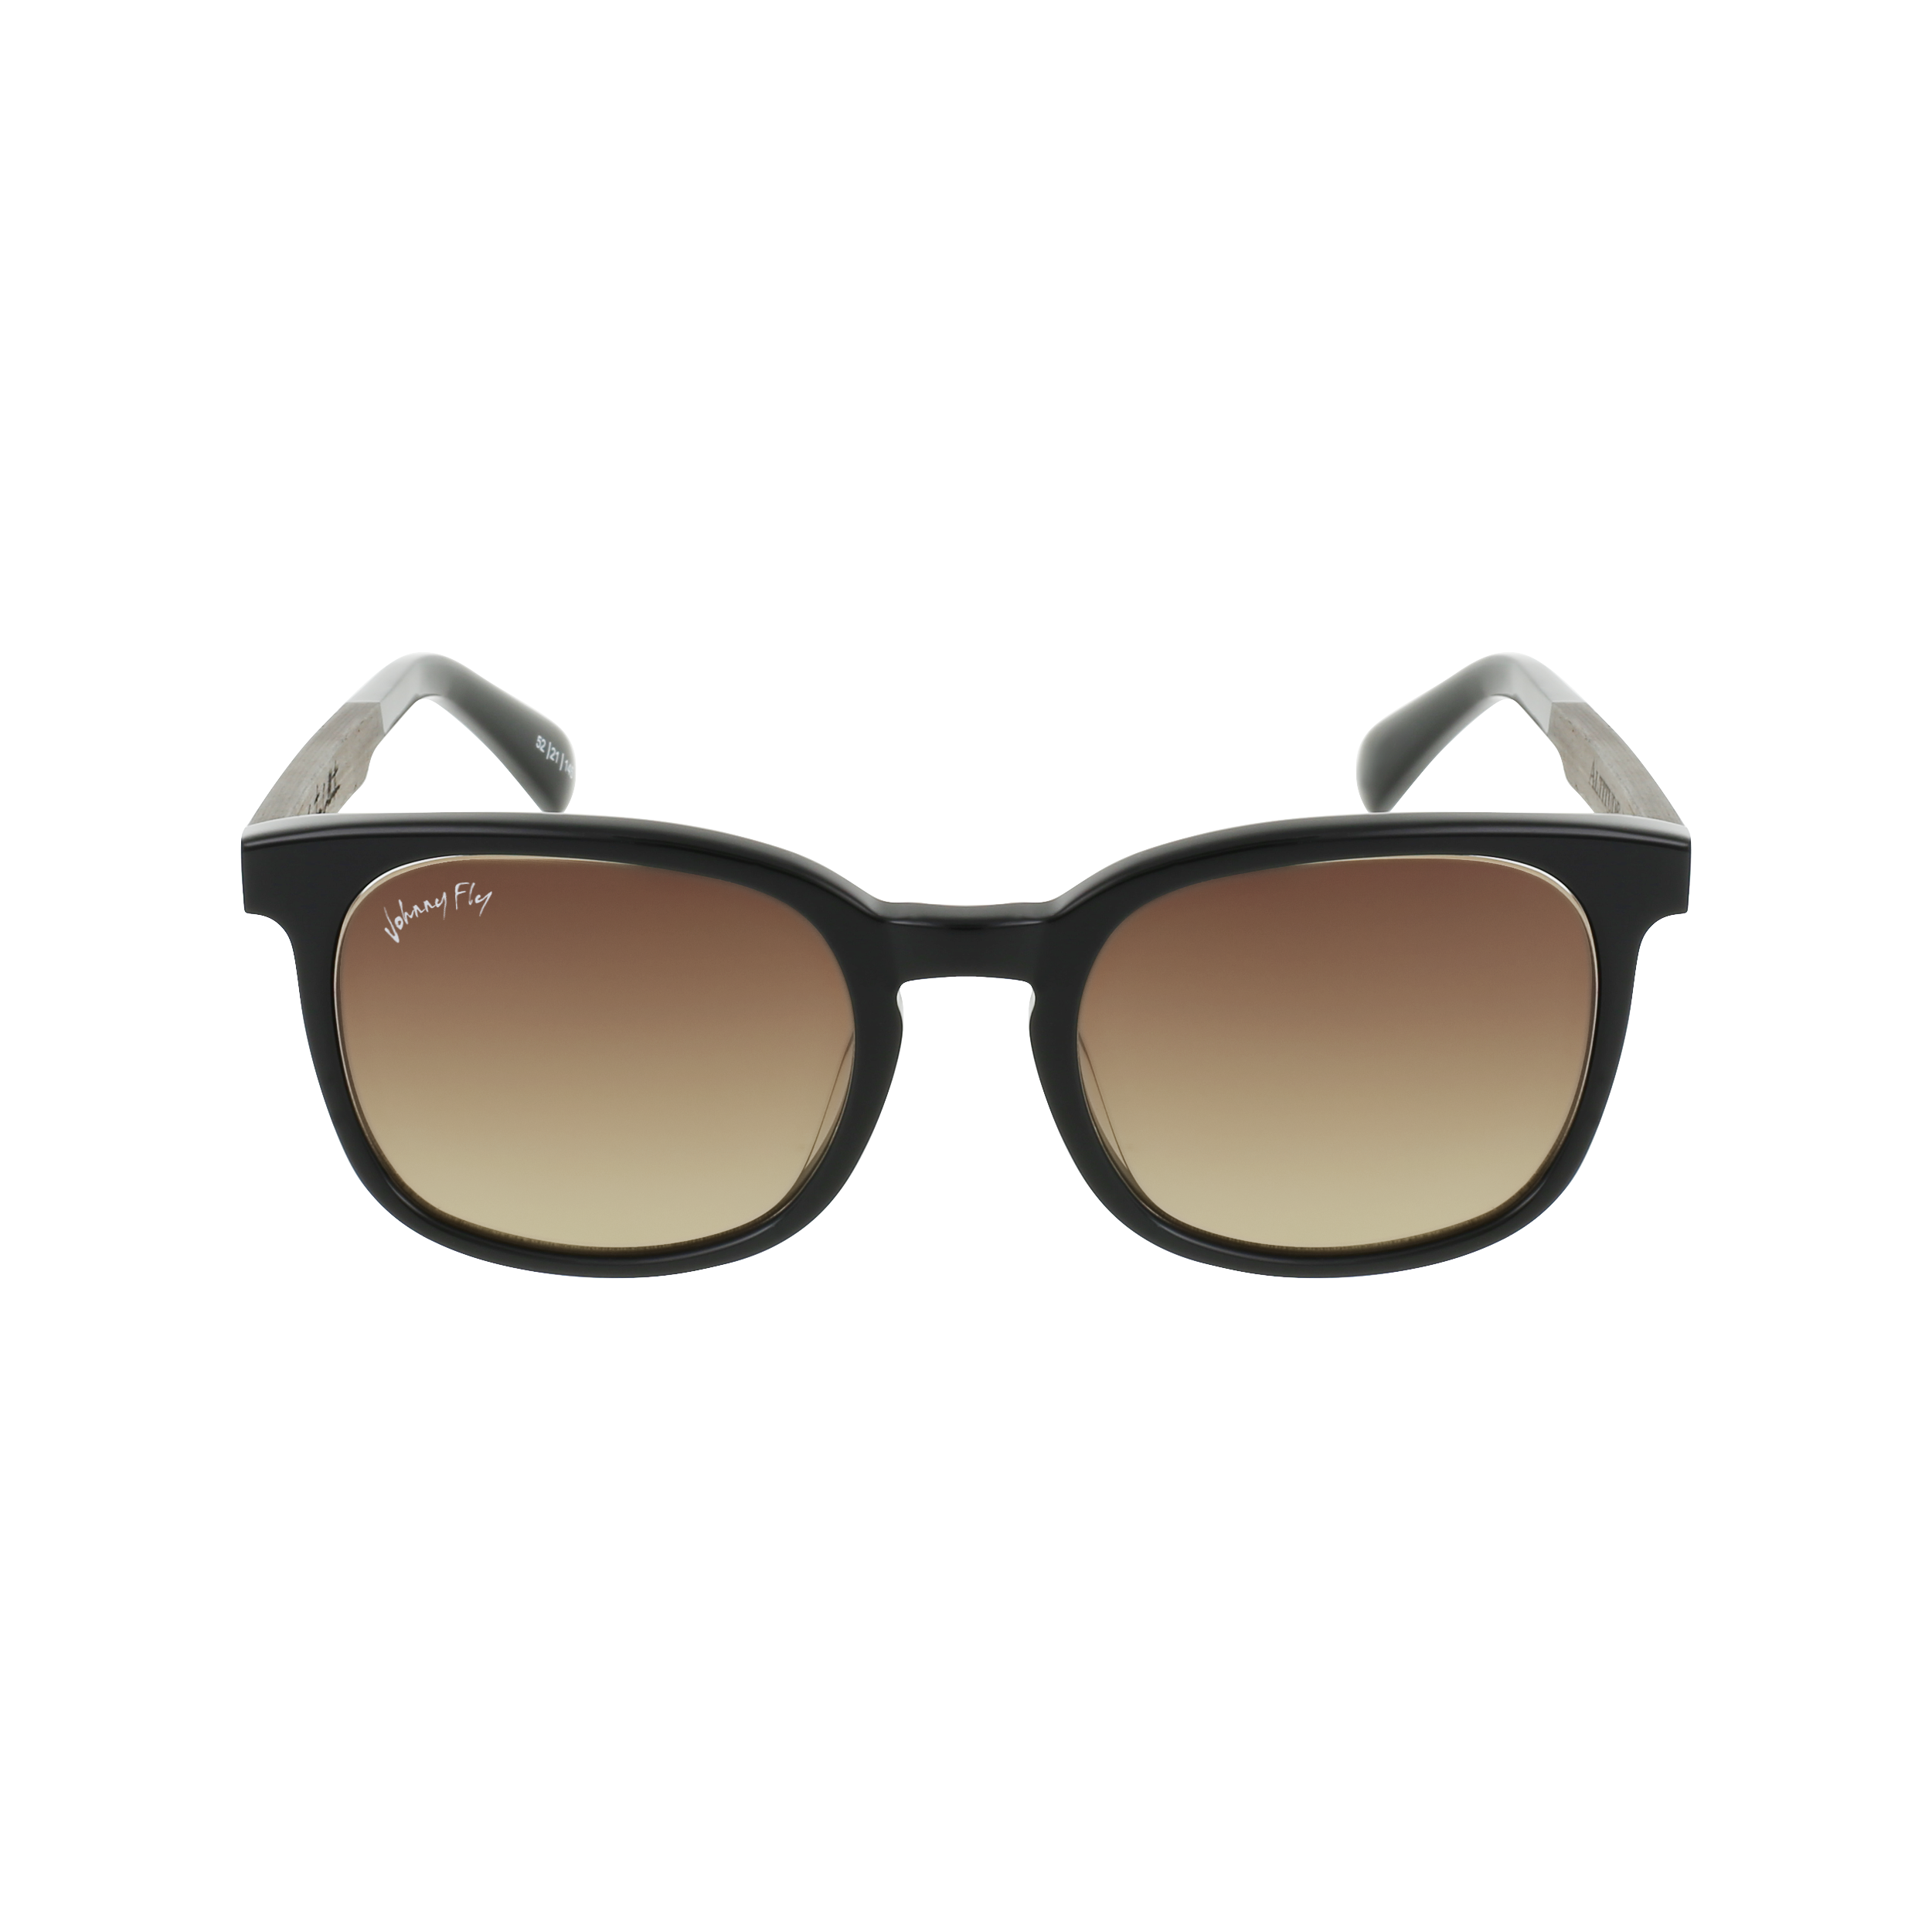 ALTITUDE - Gloss Black - Sunglasses - Johnny Fly Eyewear | 